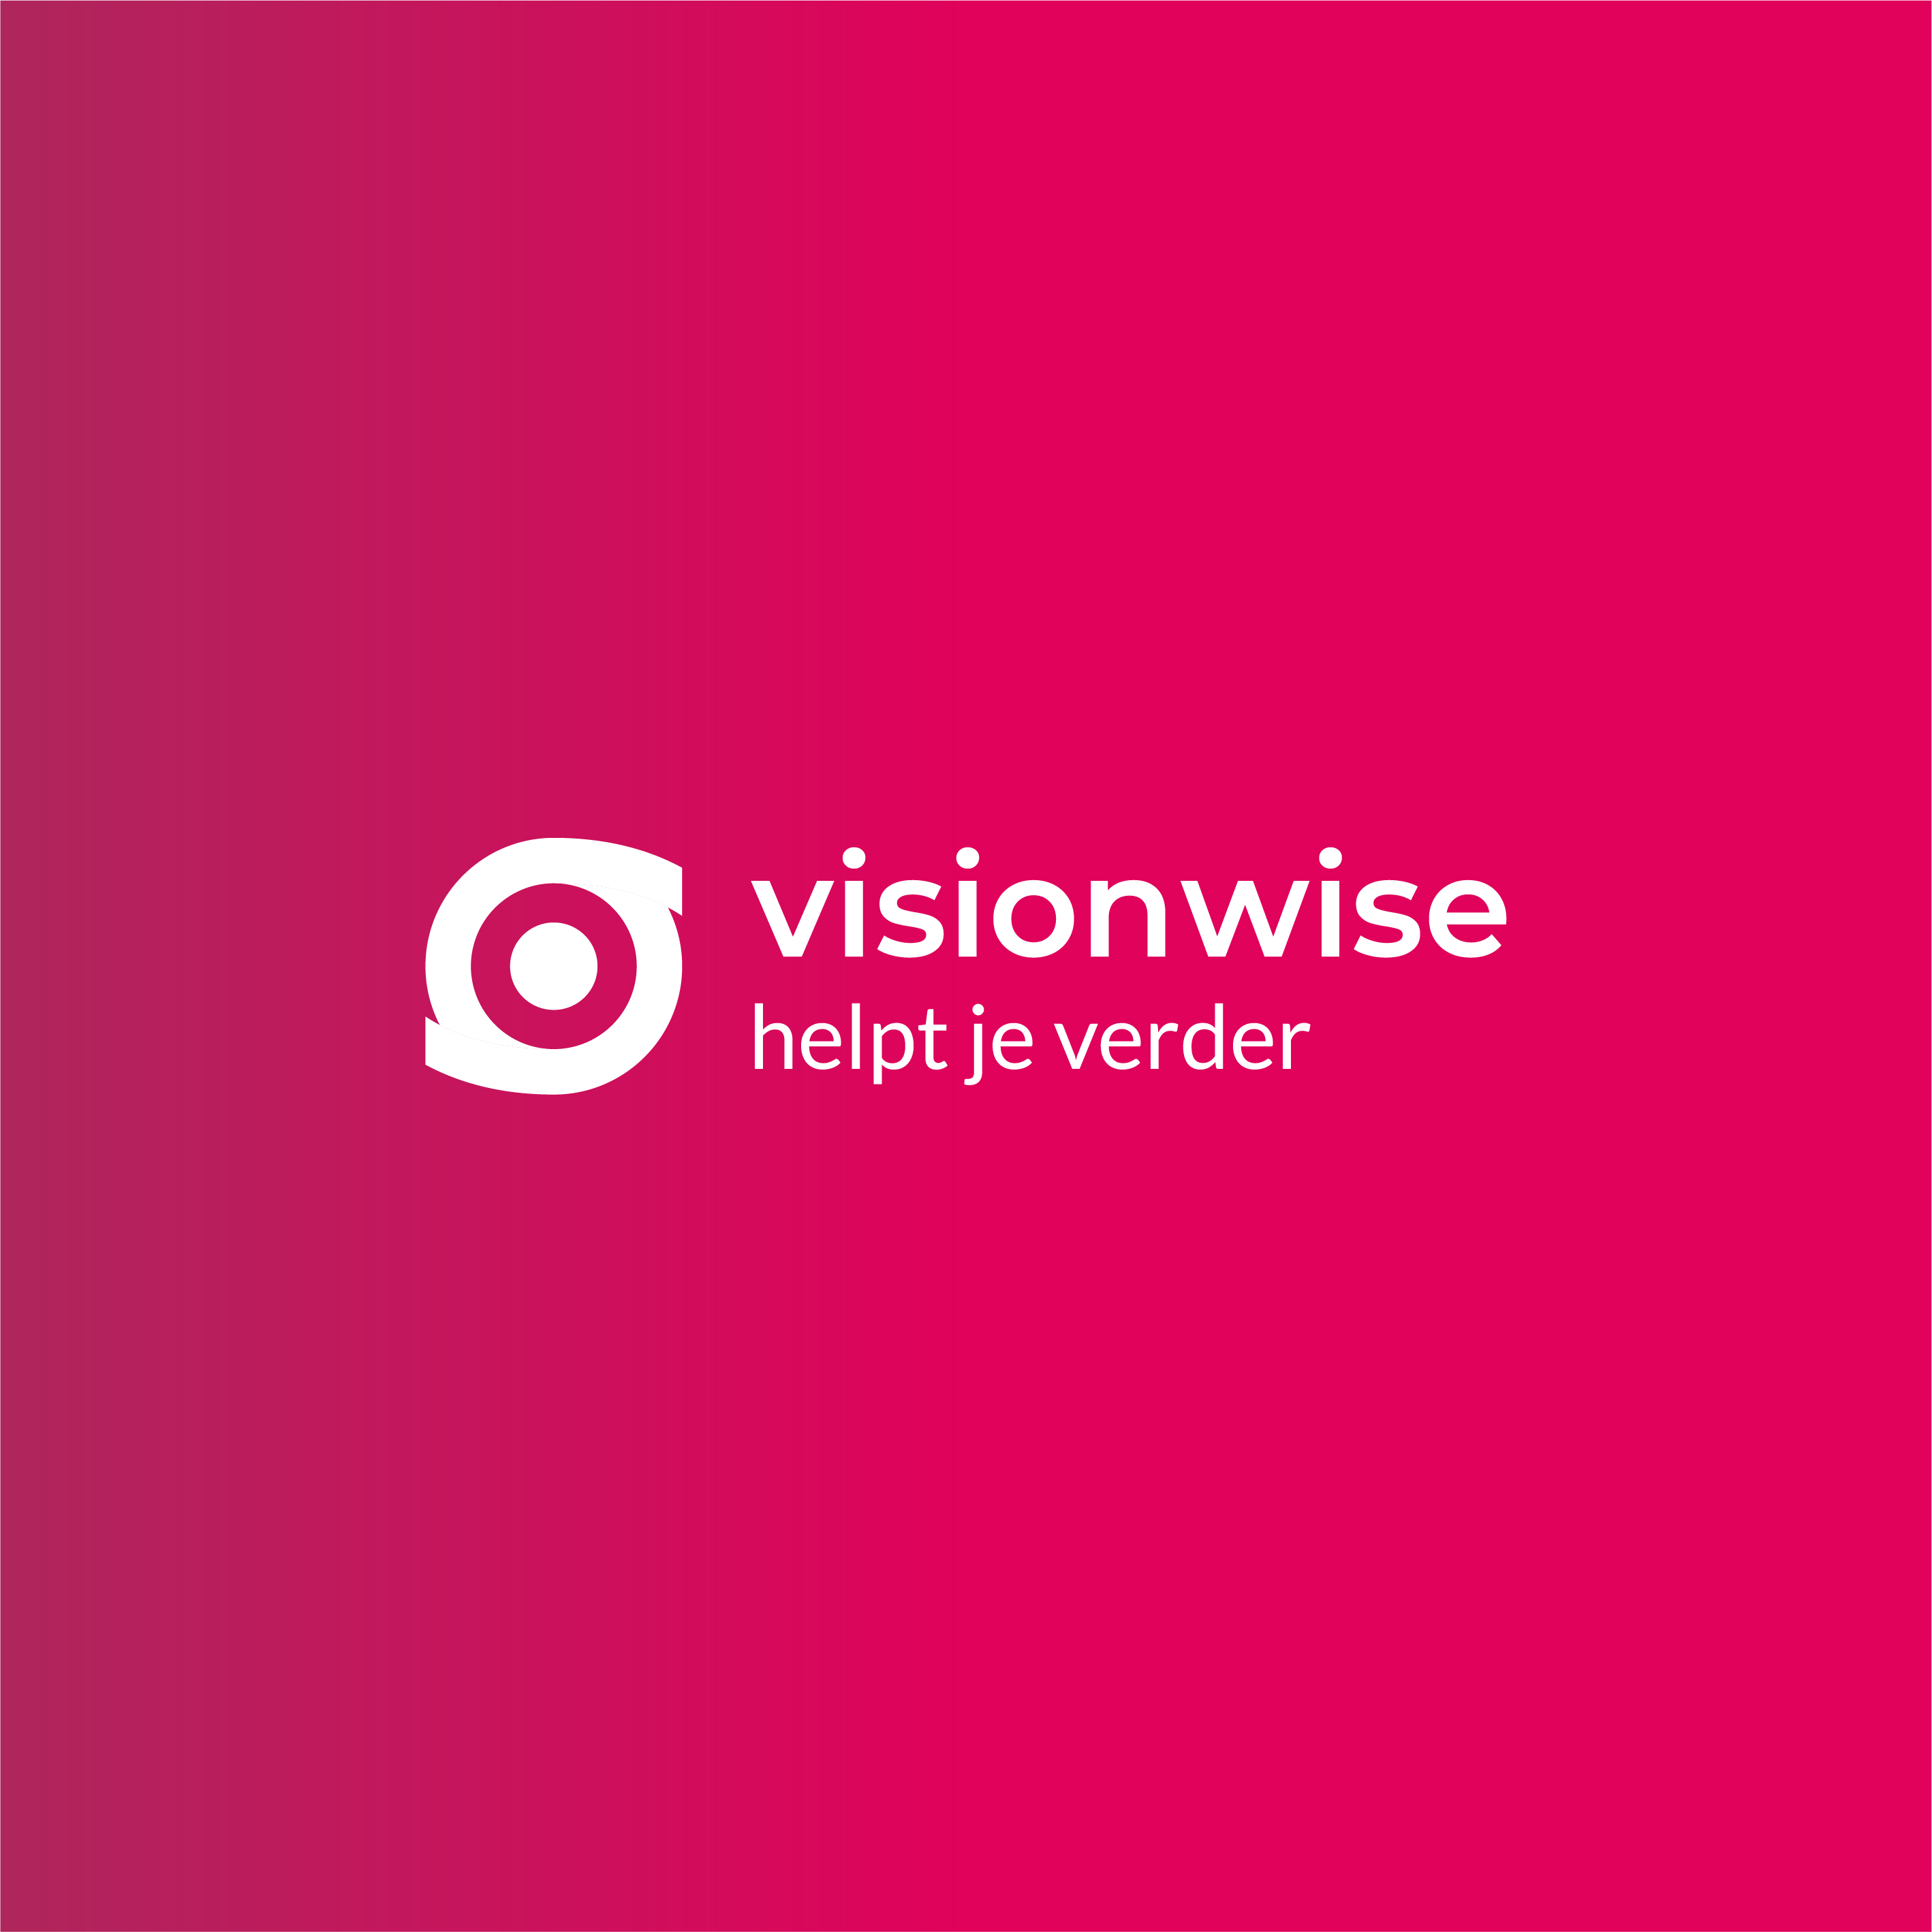 Visionwise